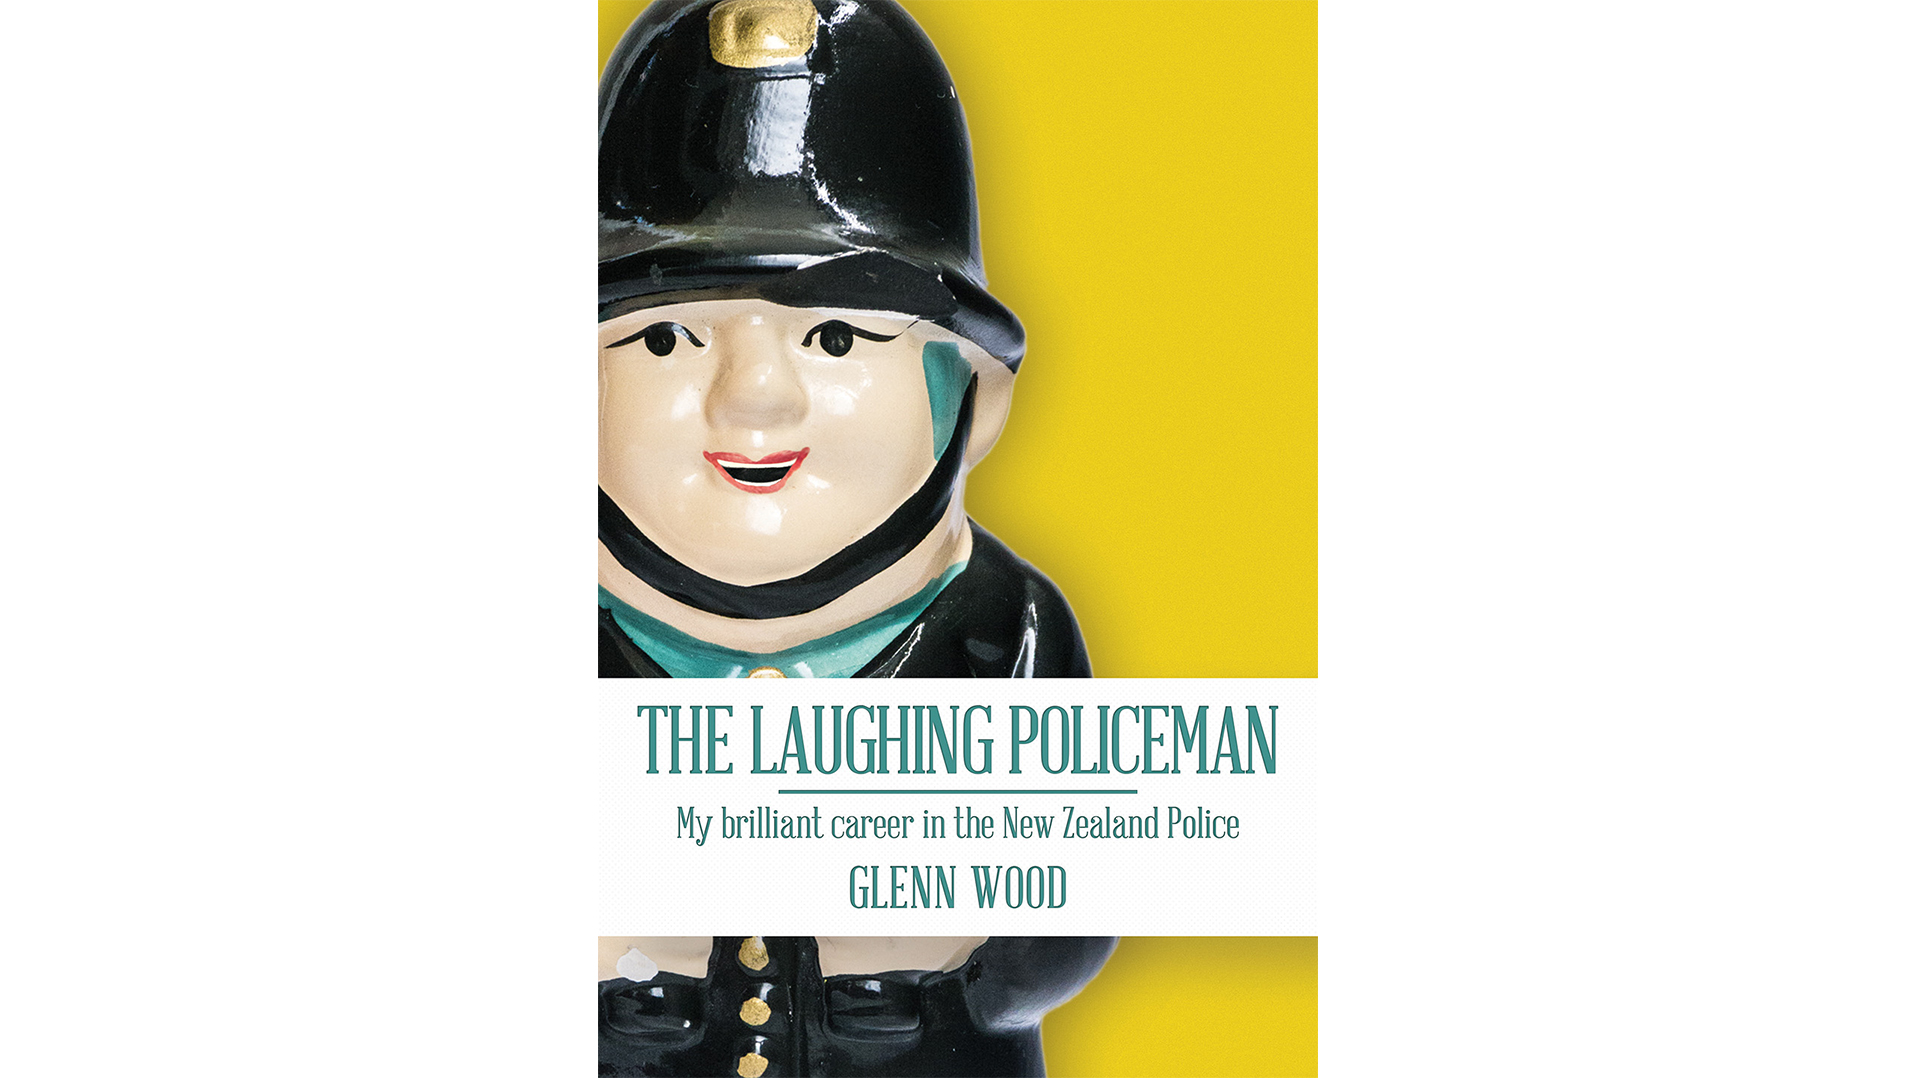 The Laughing Policeman by Maj Sjöwall